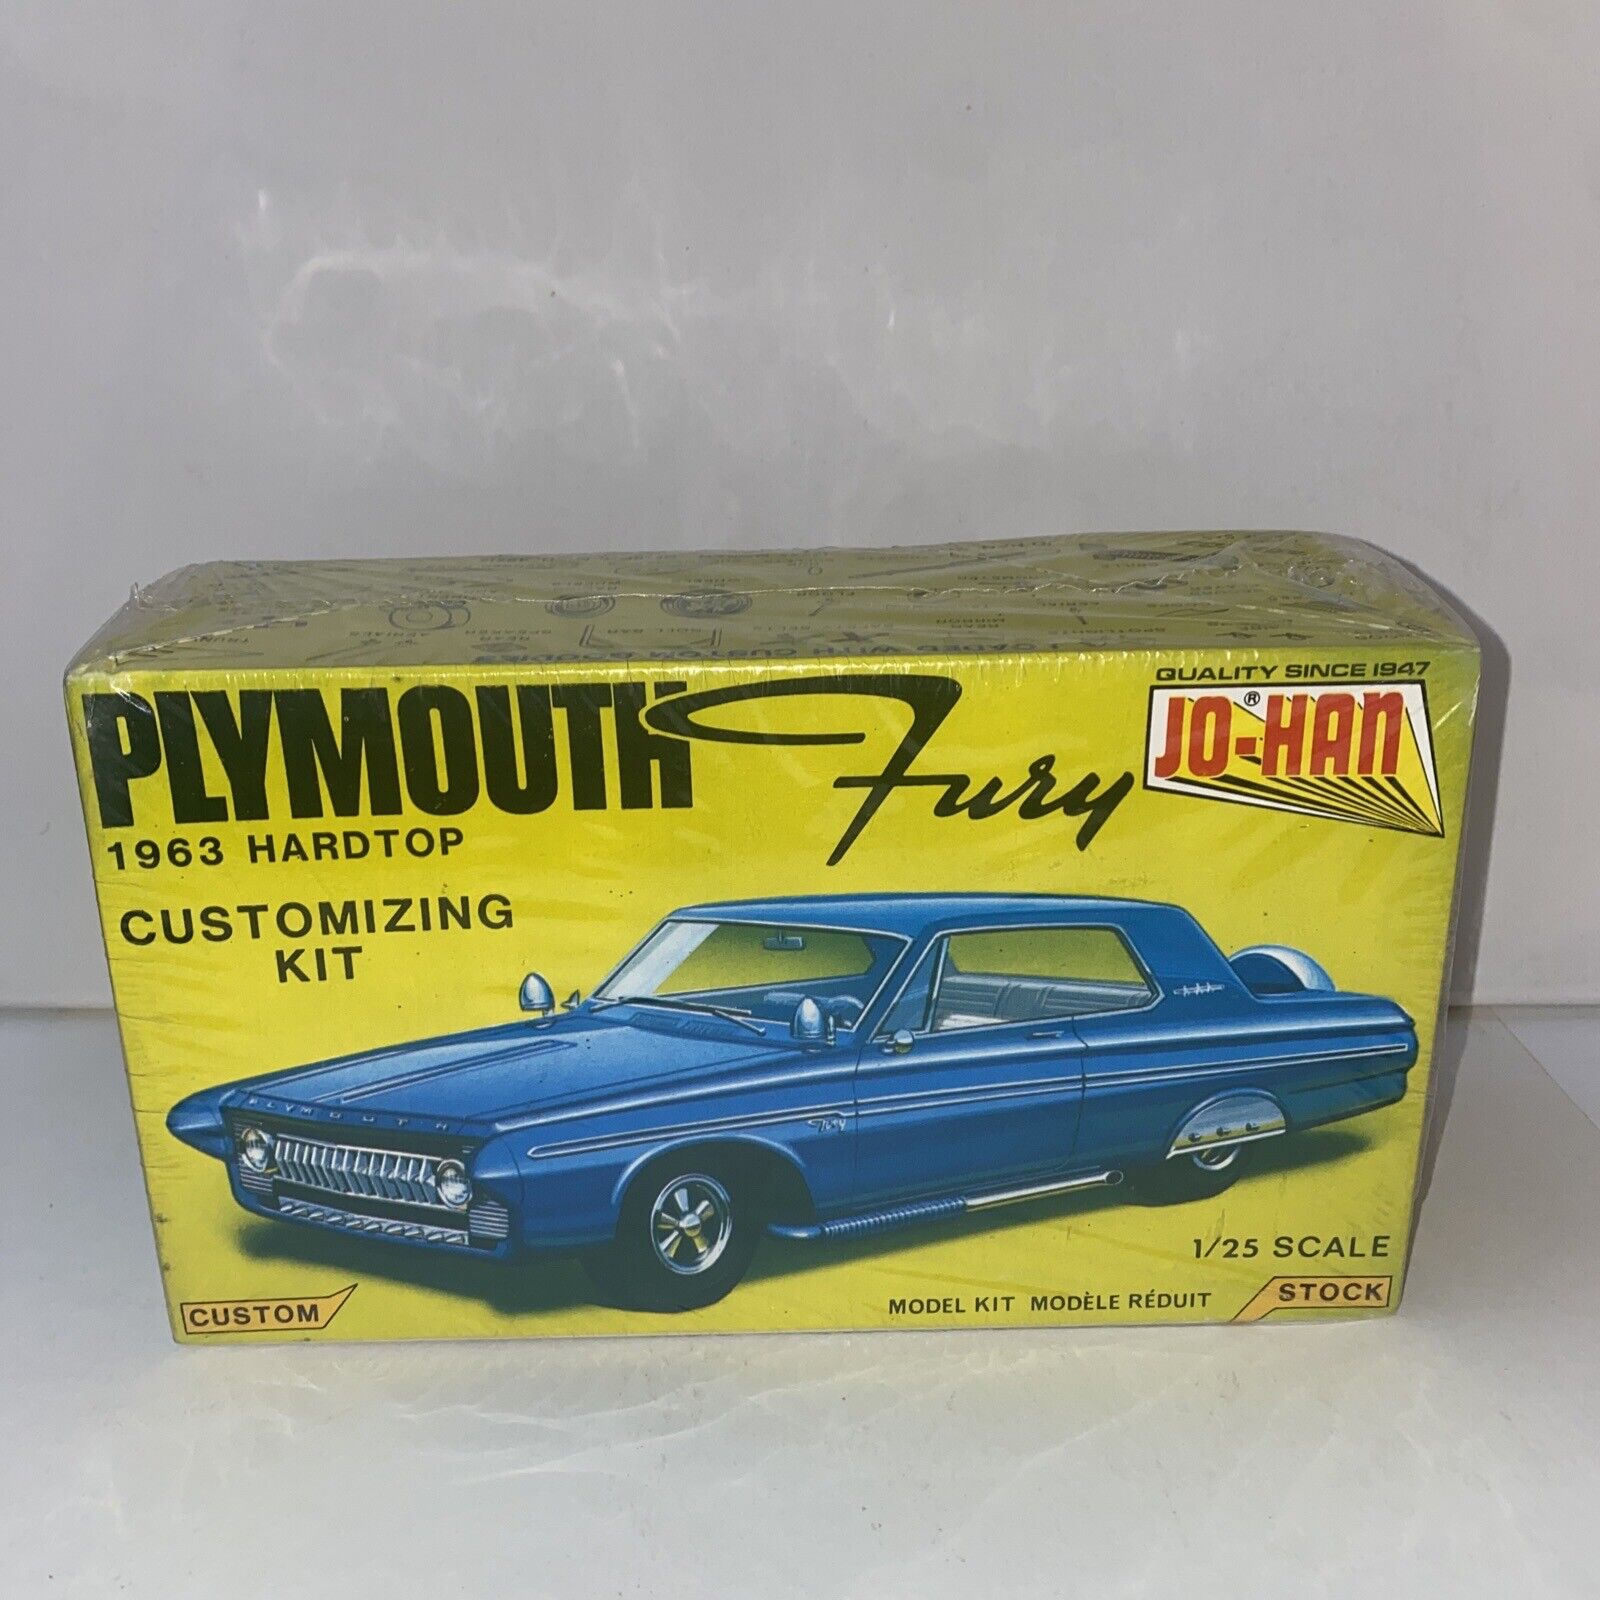 Jo-han Plymouth Fury 1963 Hardtop Customizing kit